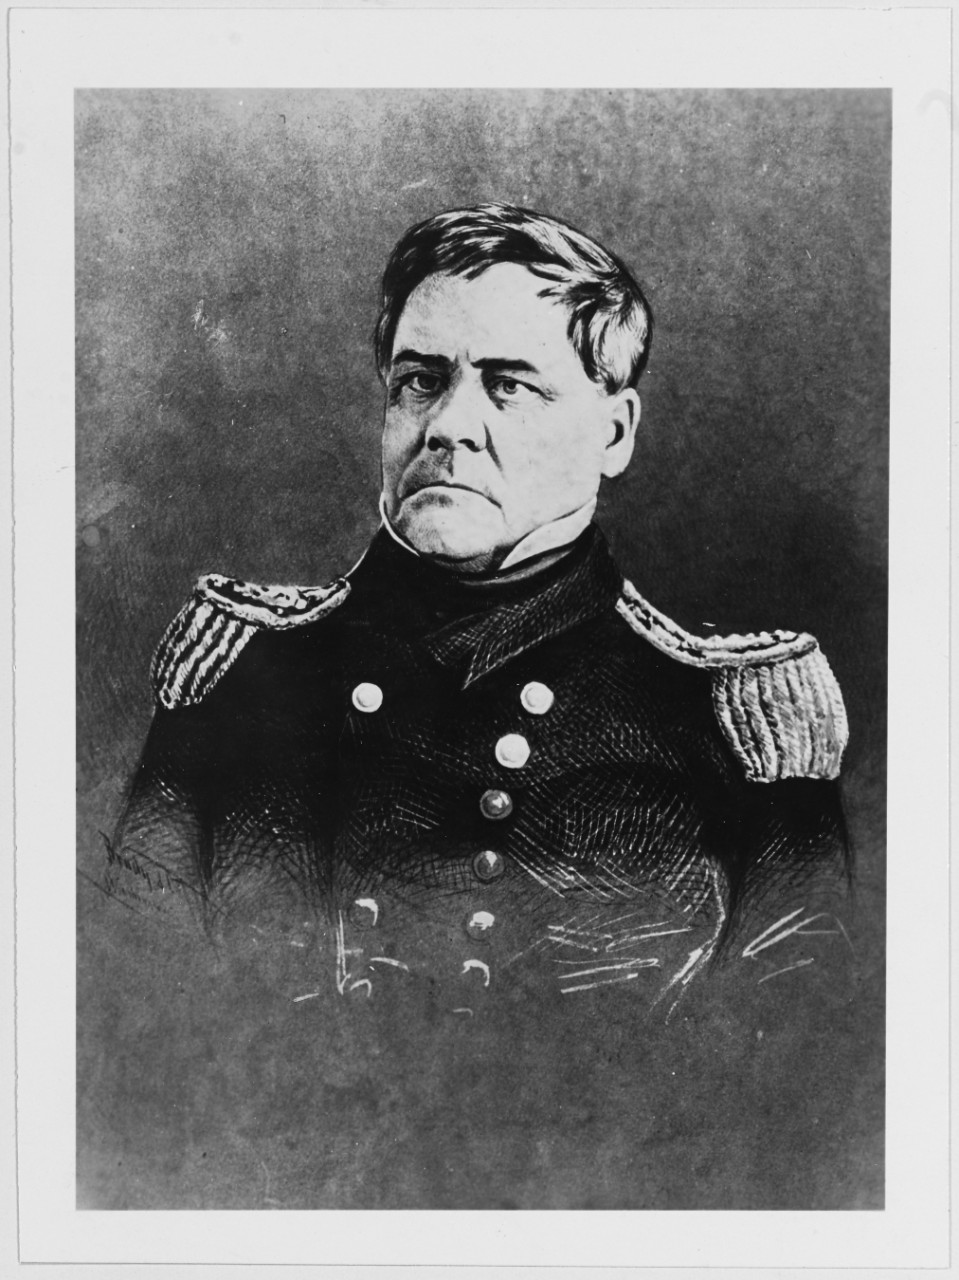 Captain Lewis Warrington, USN